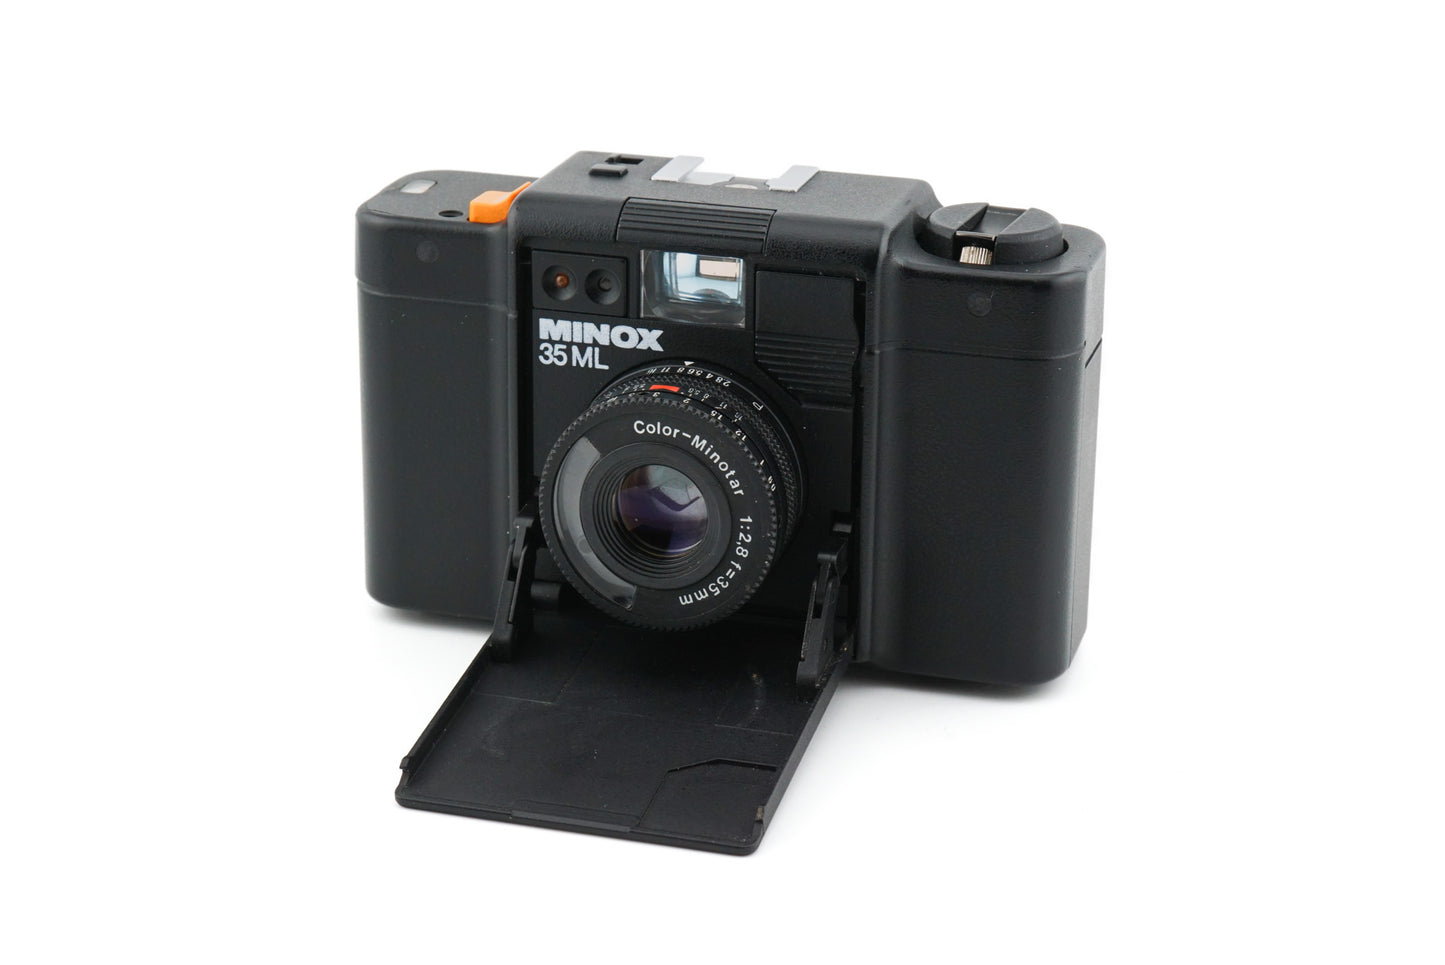 Minox 35 ML - Camera